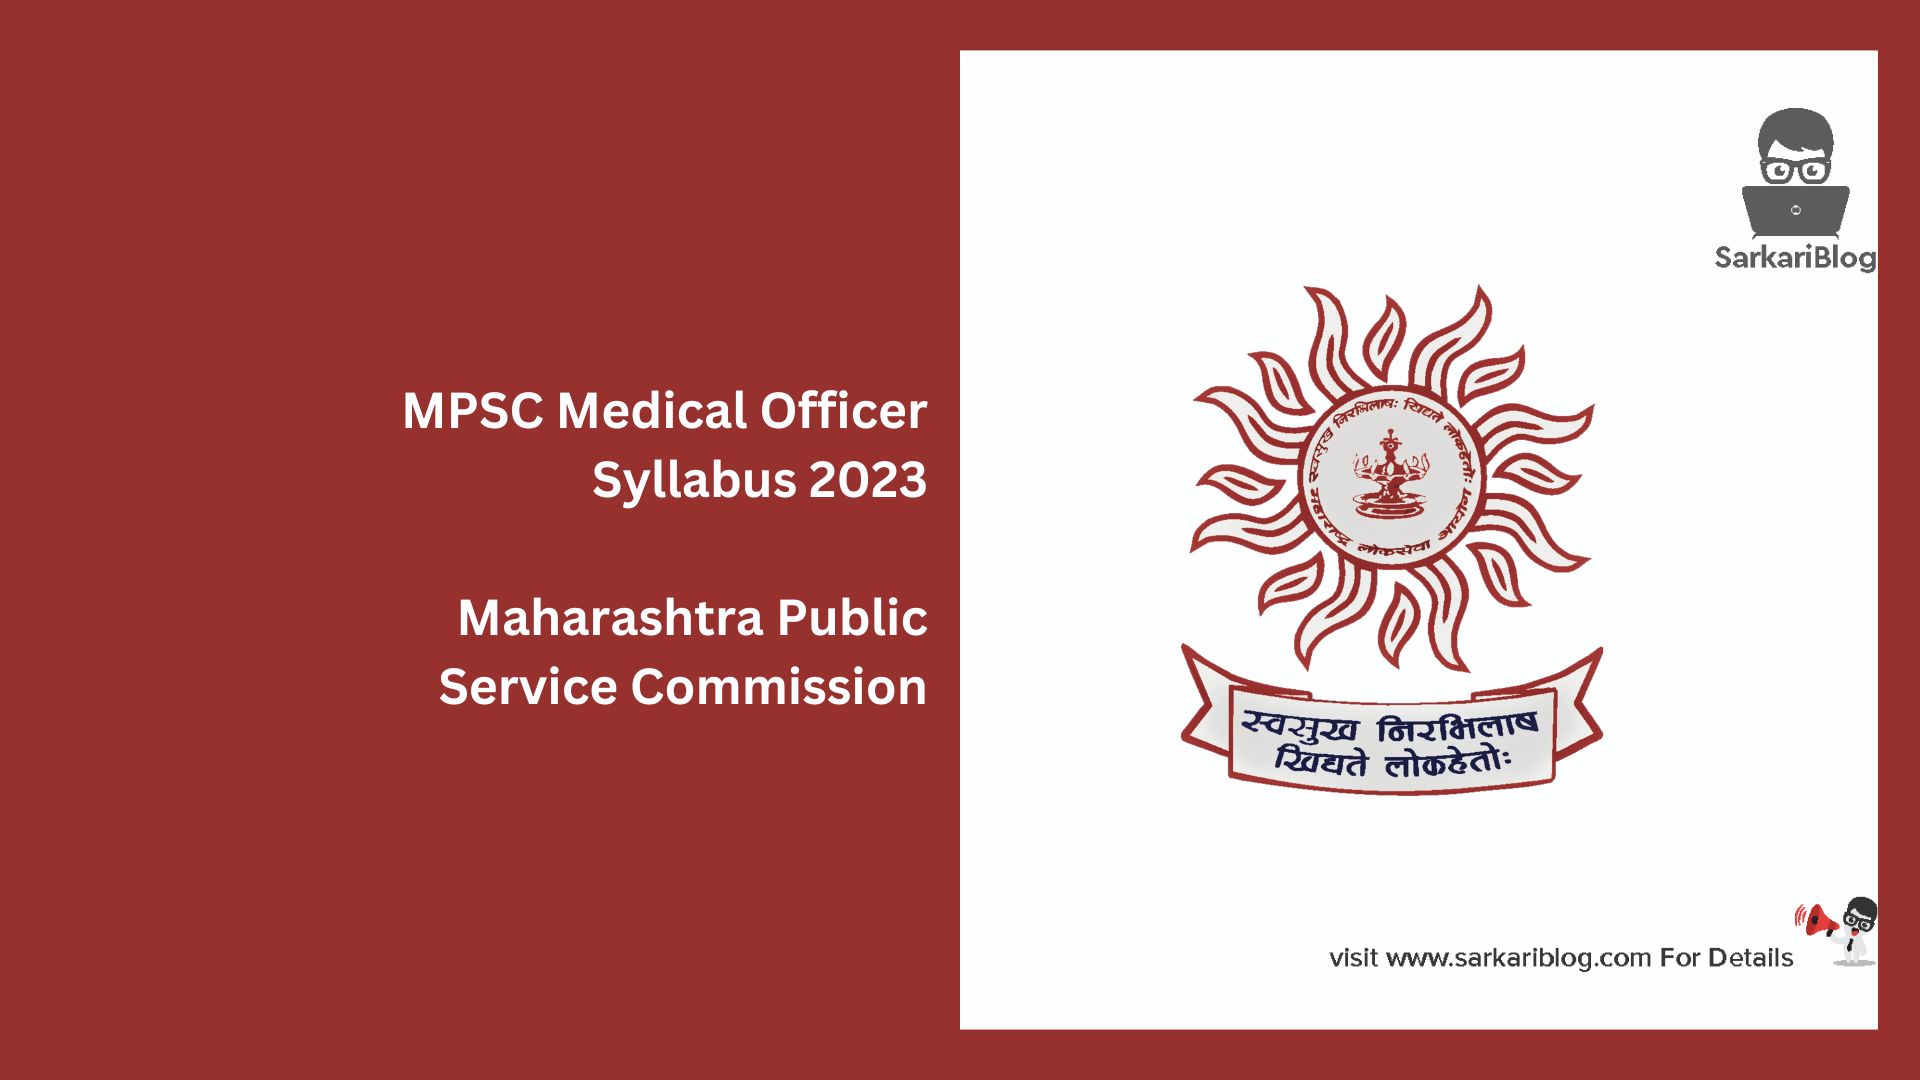 MPSC Medical Officer Syllabus 2023